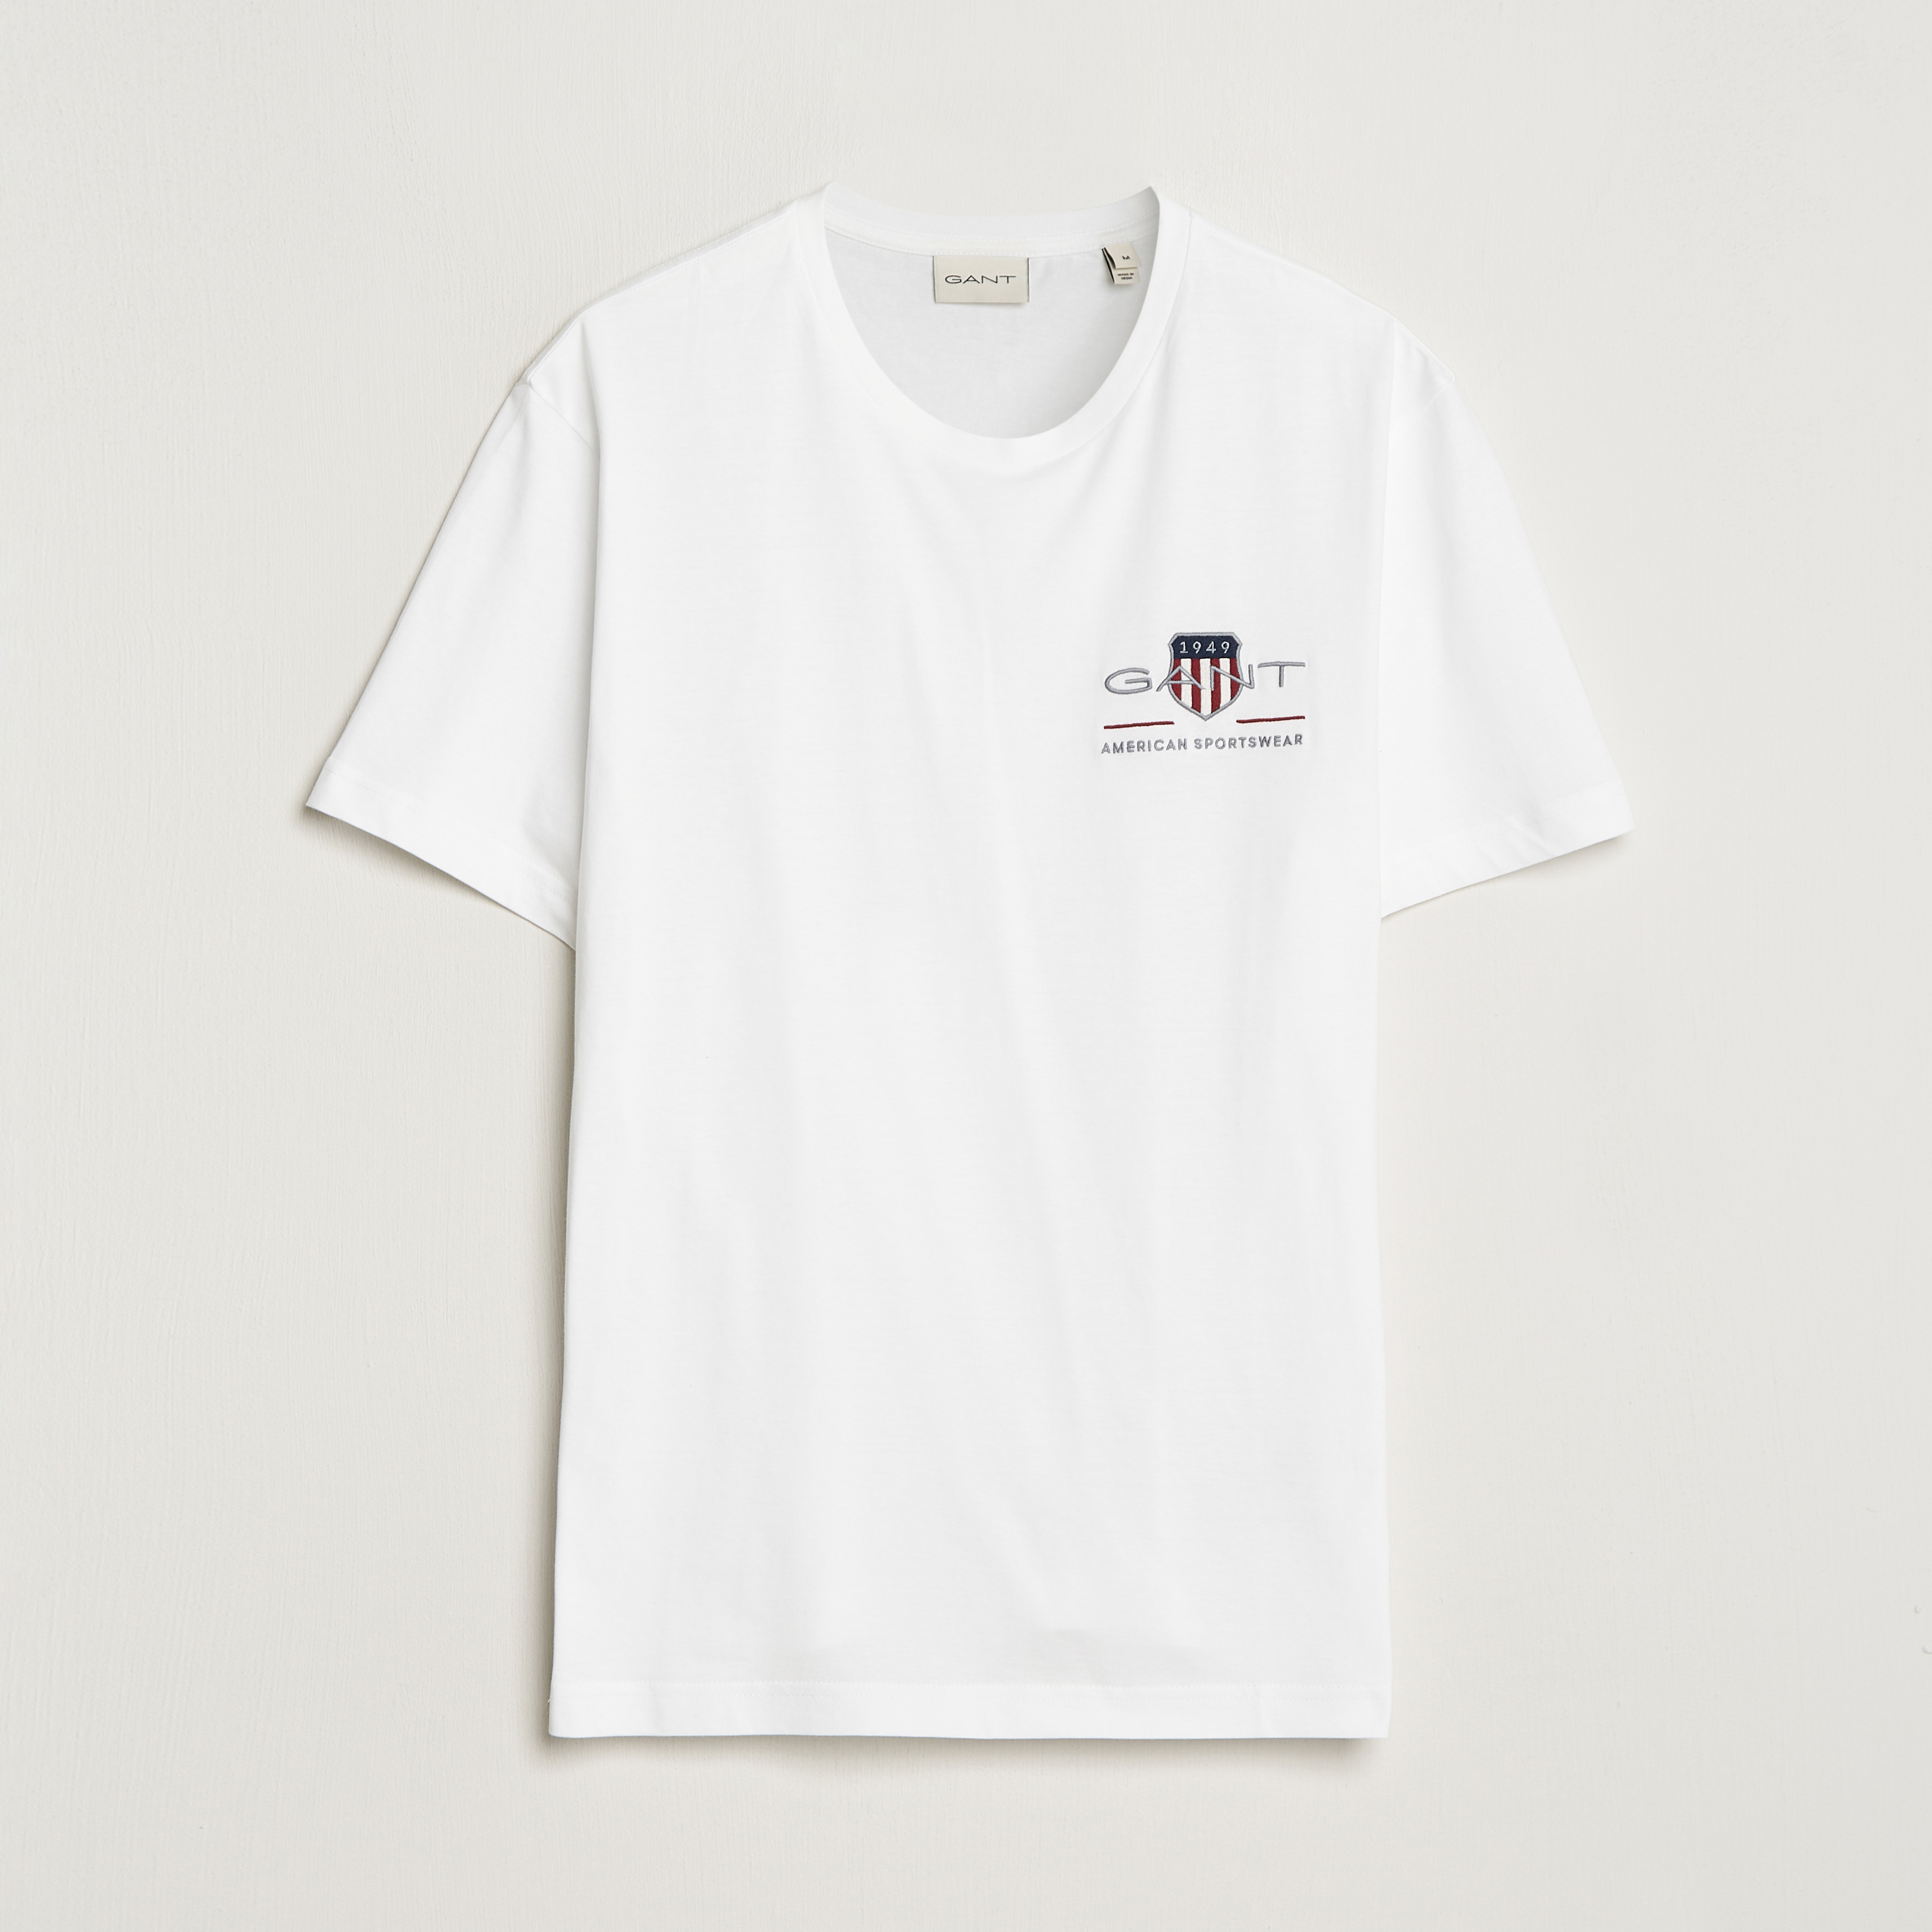 GANT Archive Shield Small Logo White at T-Shirt